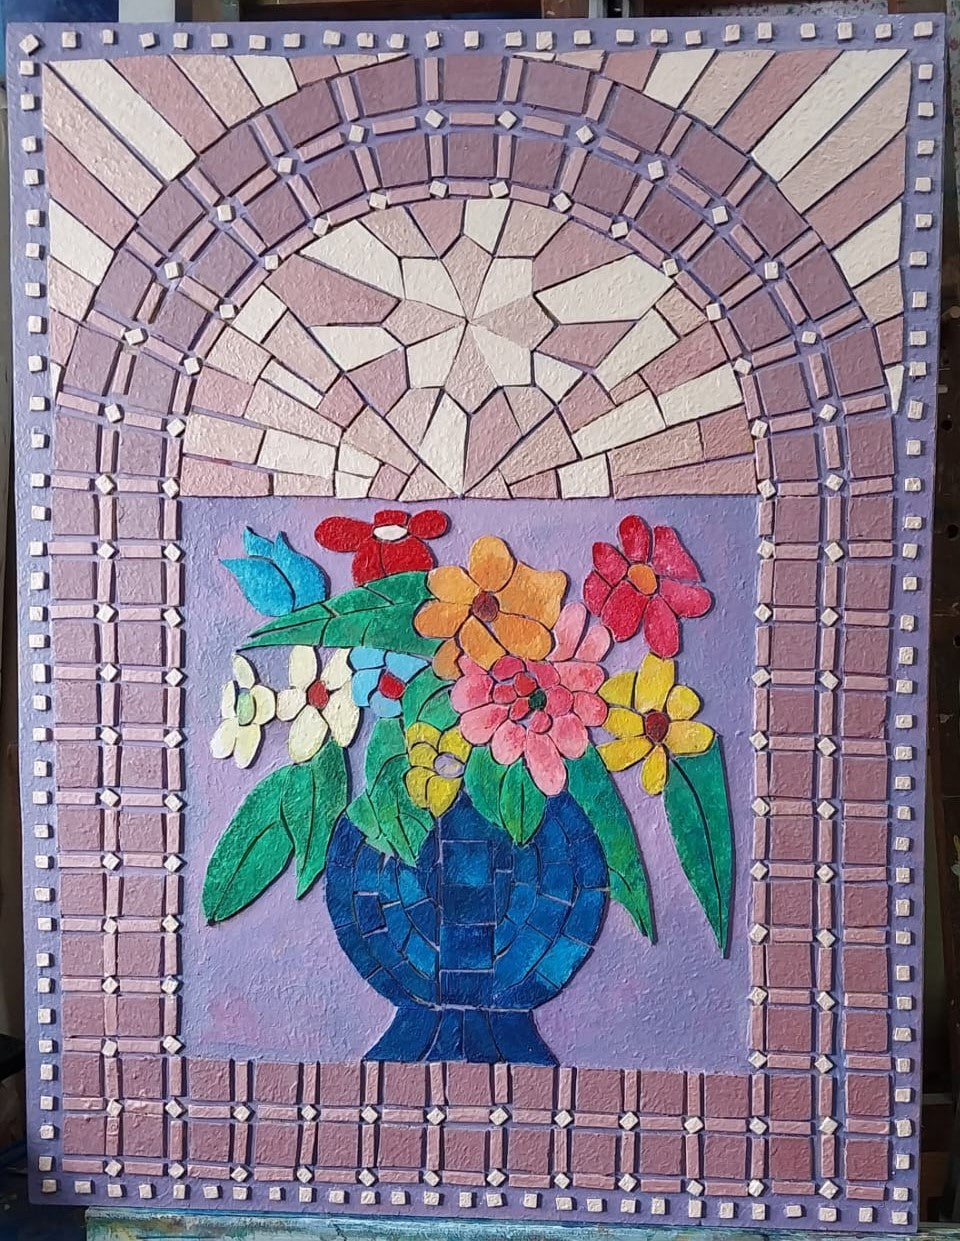 Mosaic Flower Vase